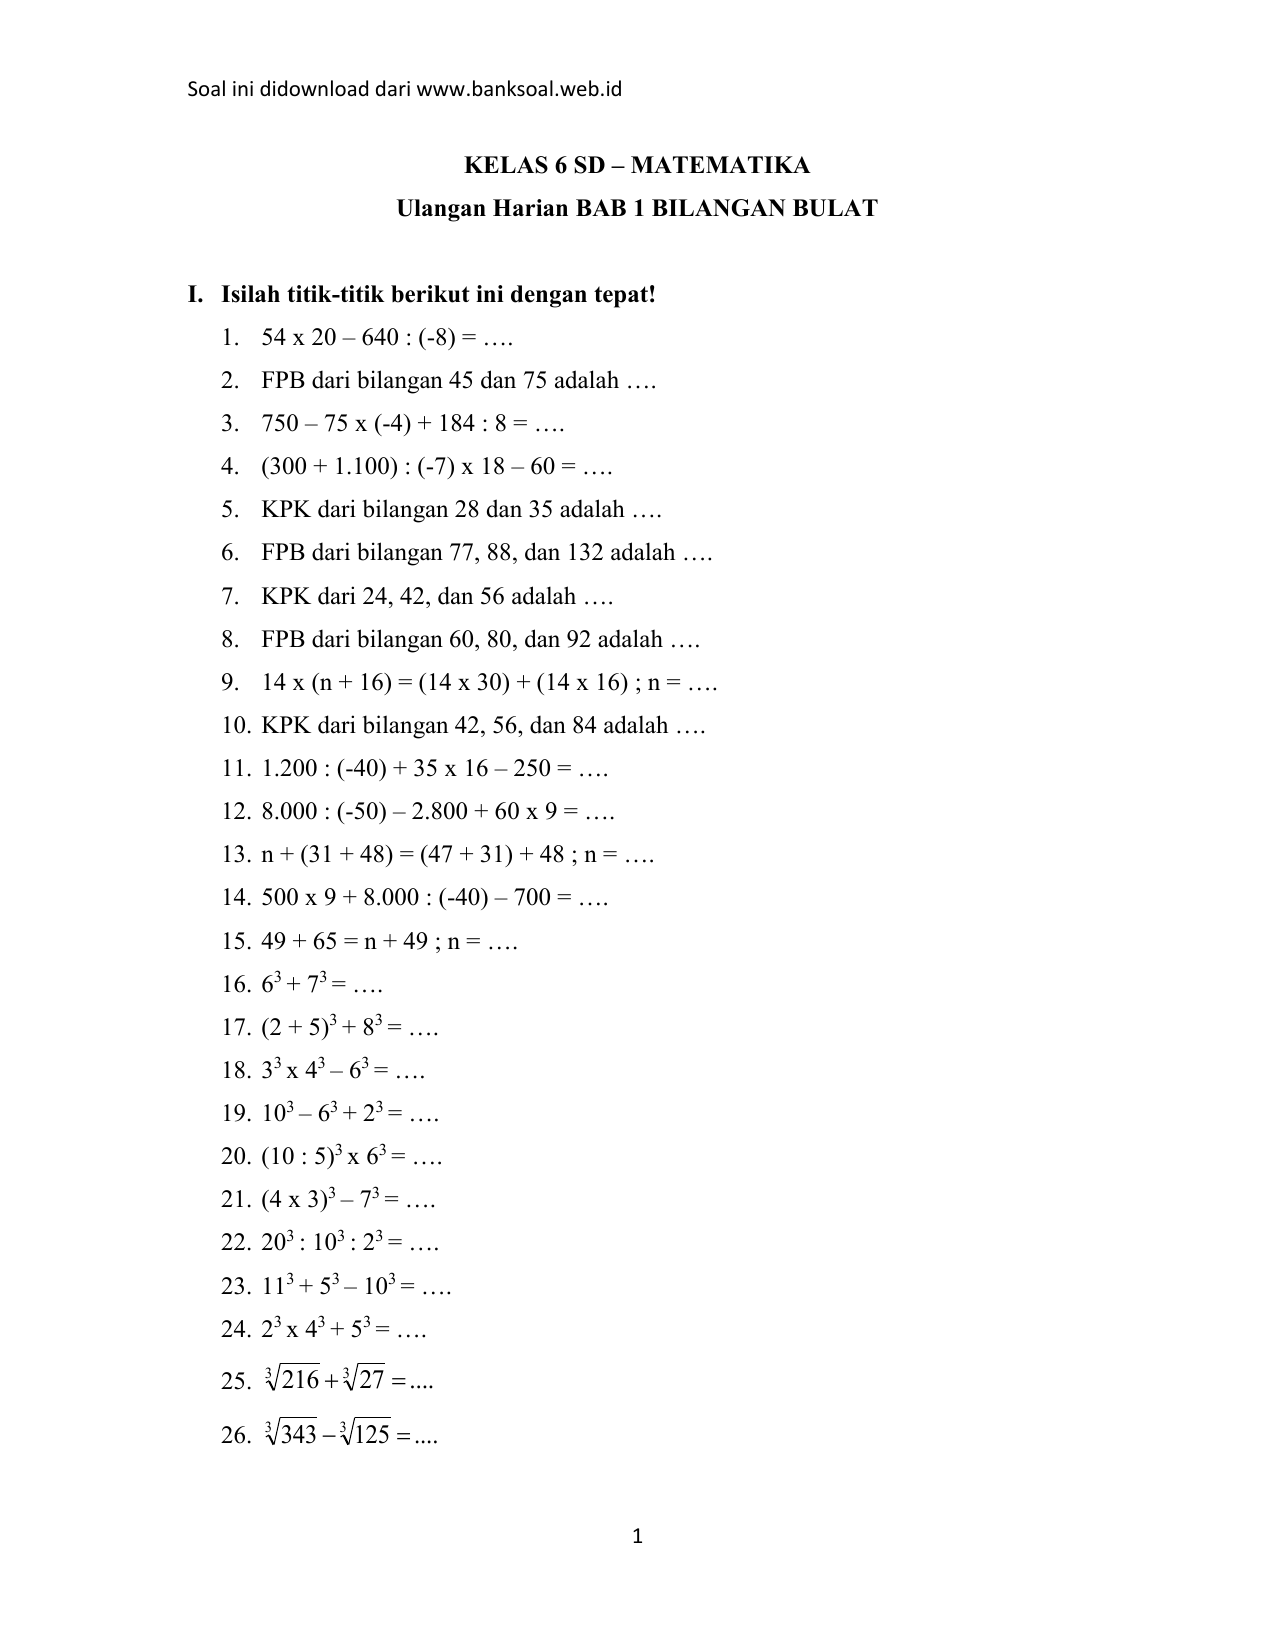 Kelas 6 Sd Matematika Download Soal Ujian Tengah Semester Ganjil Uts 1